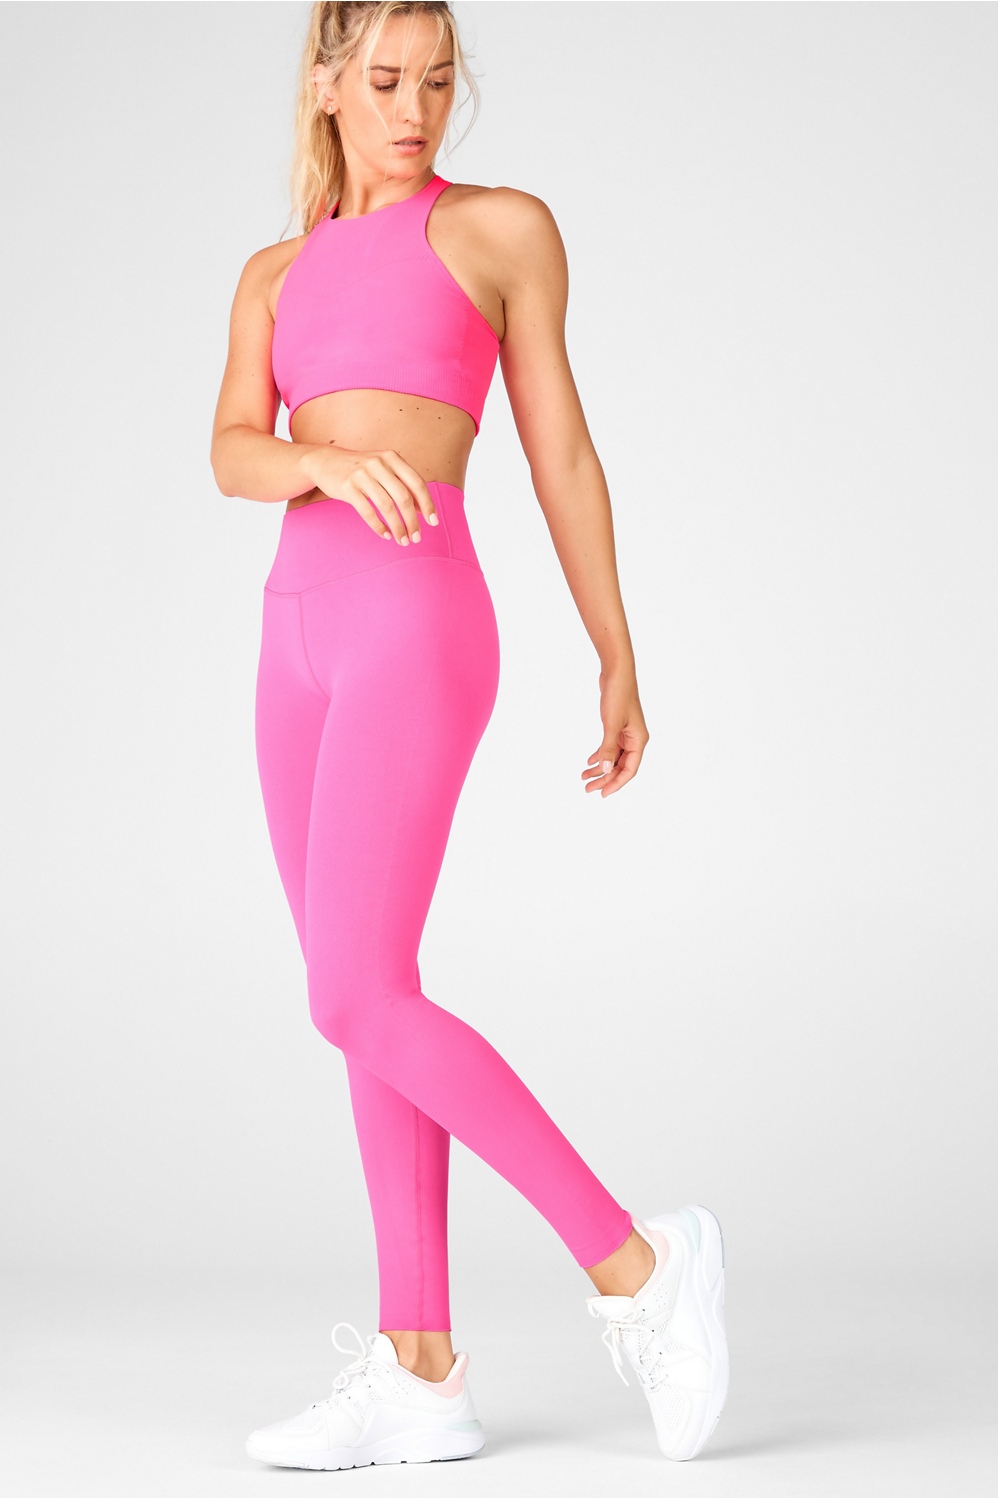 Sports Mid-Calf Leggings in Techno Material for Girls - light pink, Girls